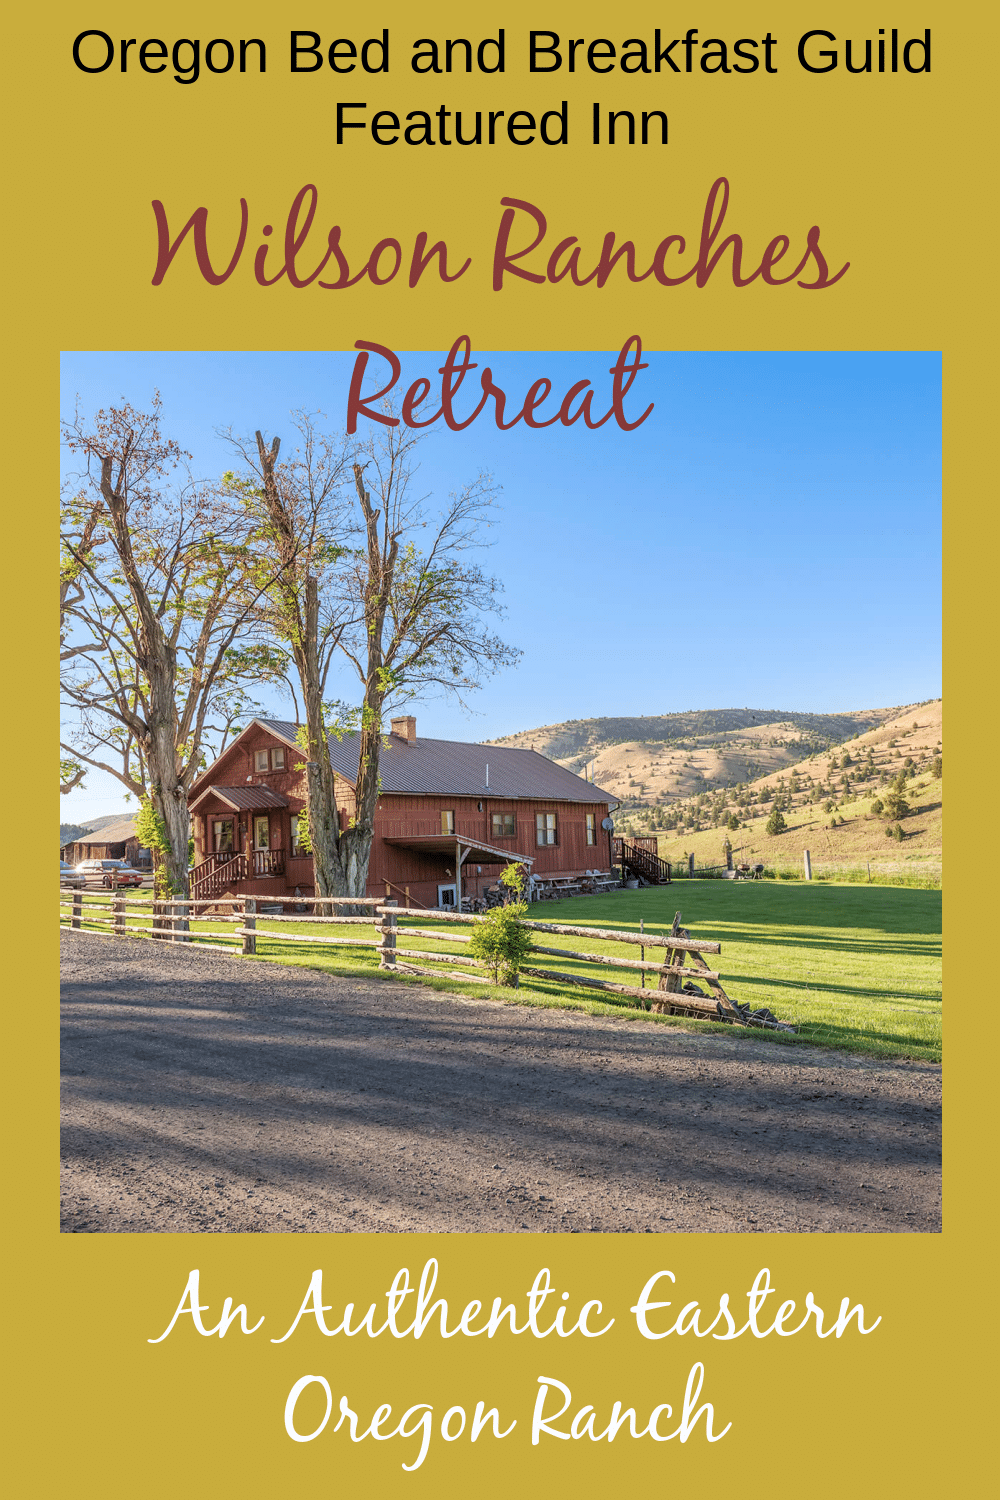 Wilson Ranches Retreat pinterest pin